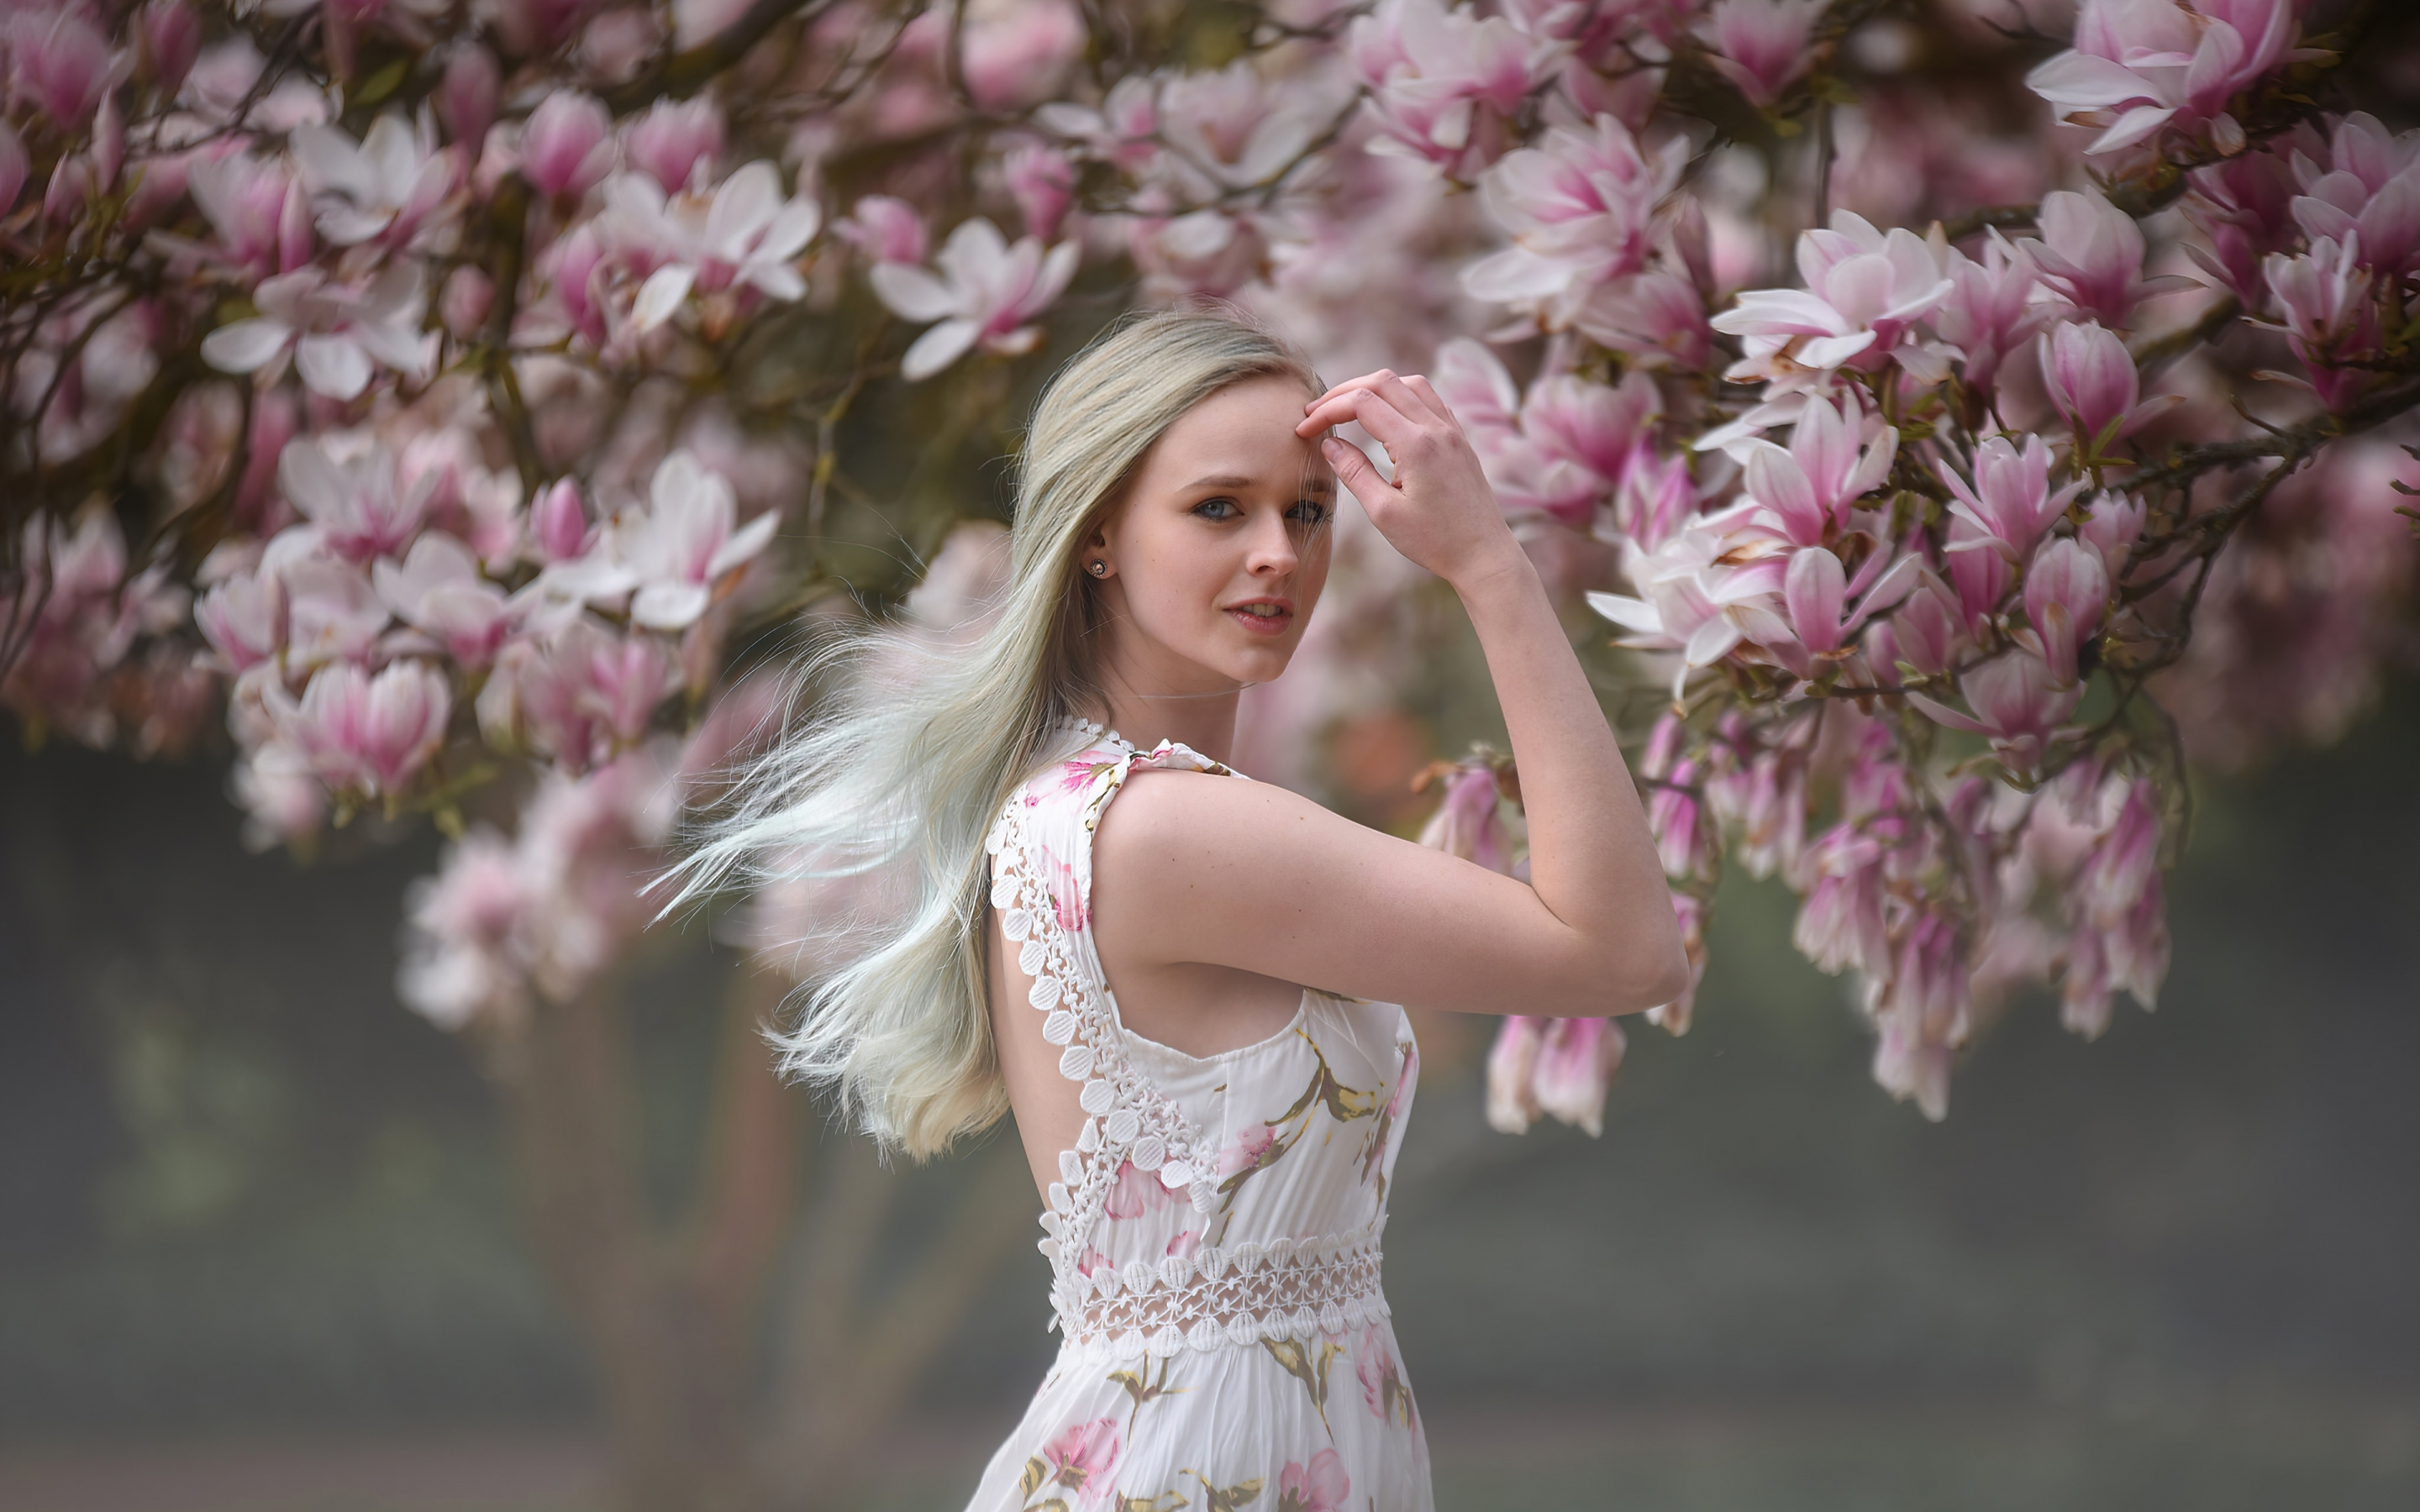 Women, outdoor, blossom, girl model, 2880x1800 wallpaper